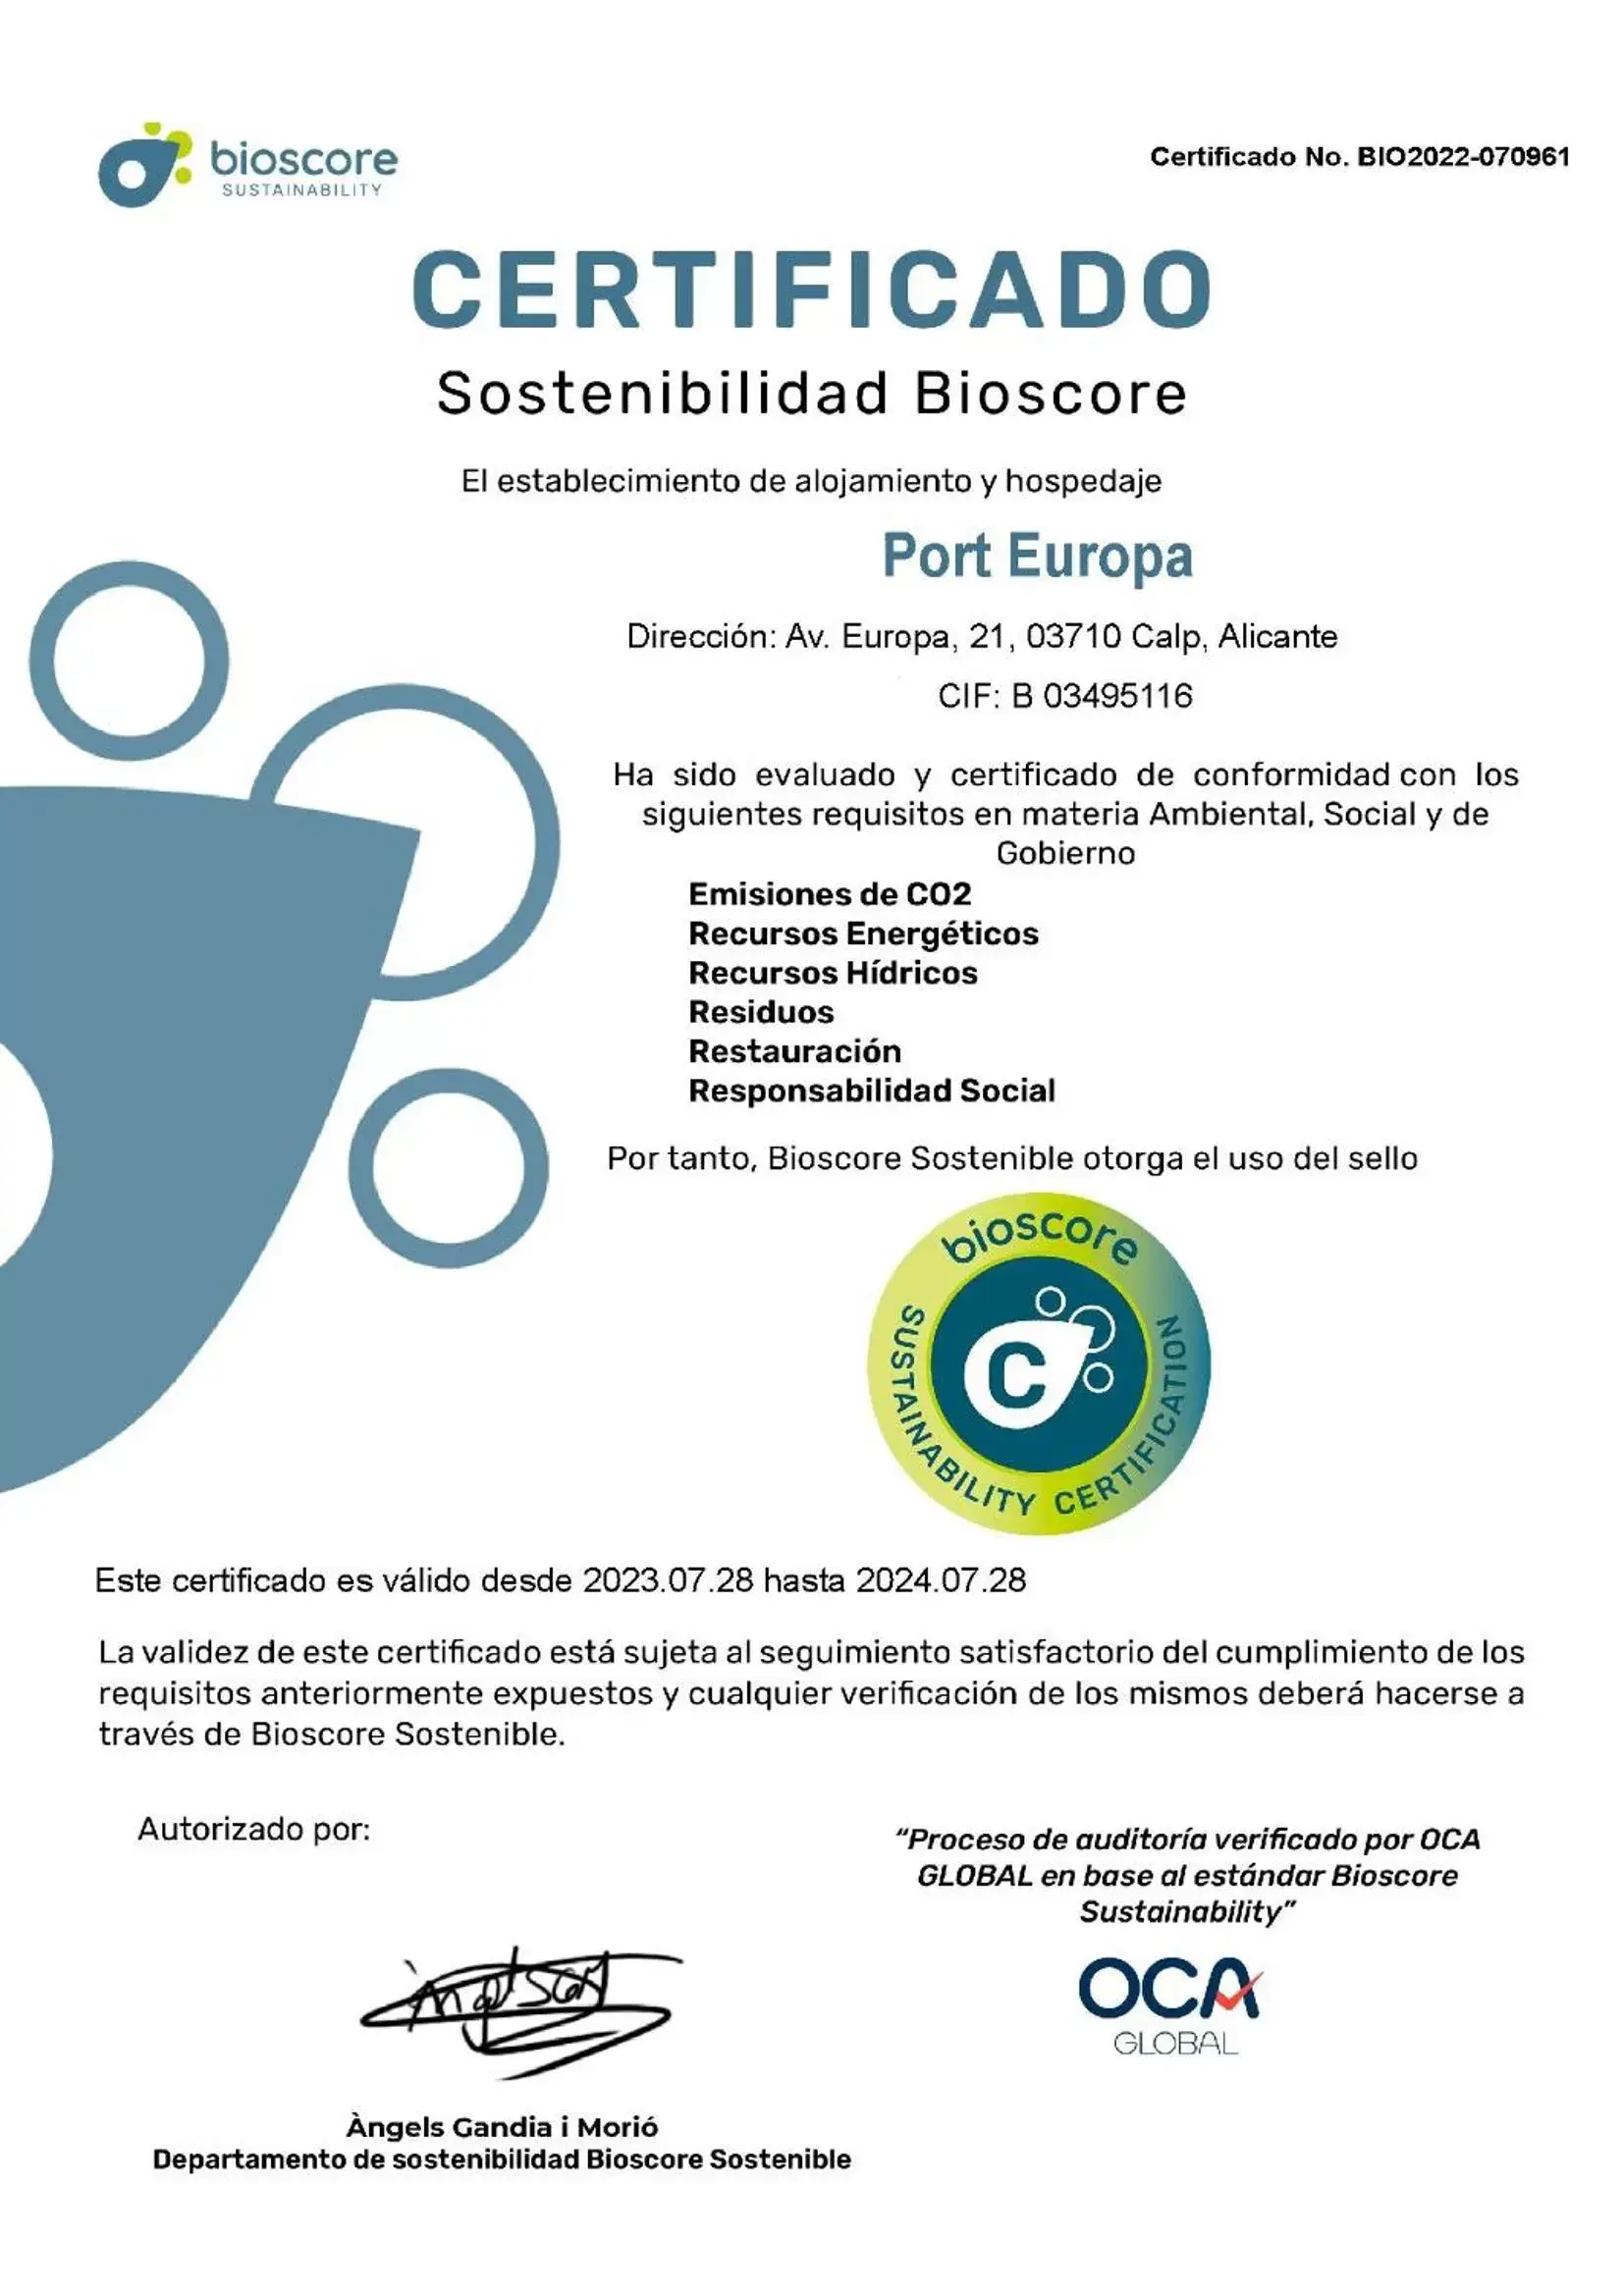 Certificate/Award in Port Europa